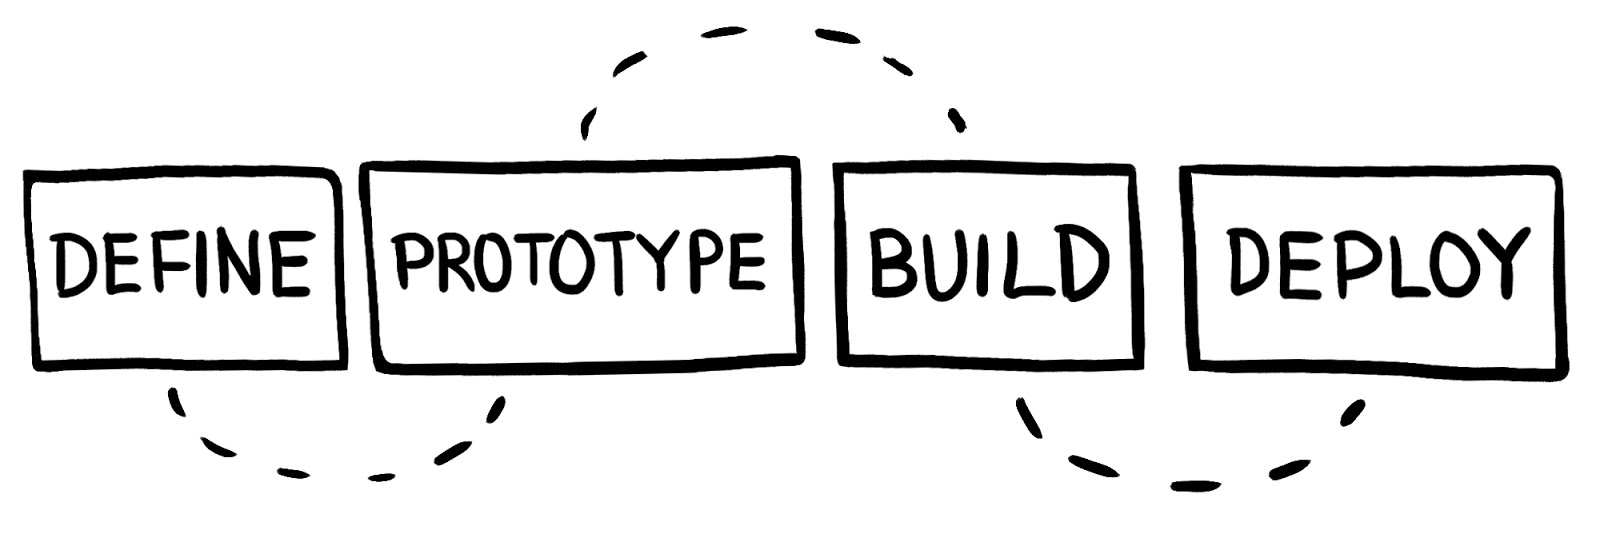 Four steps of the design process: Define > Prototype > Build > Deploy